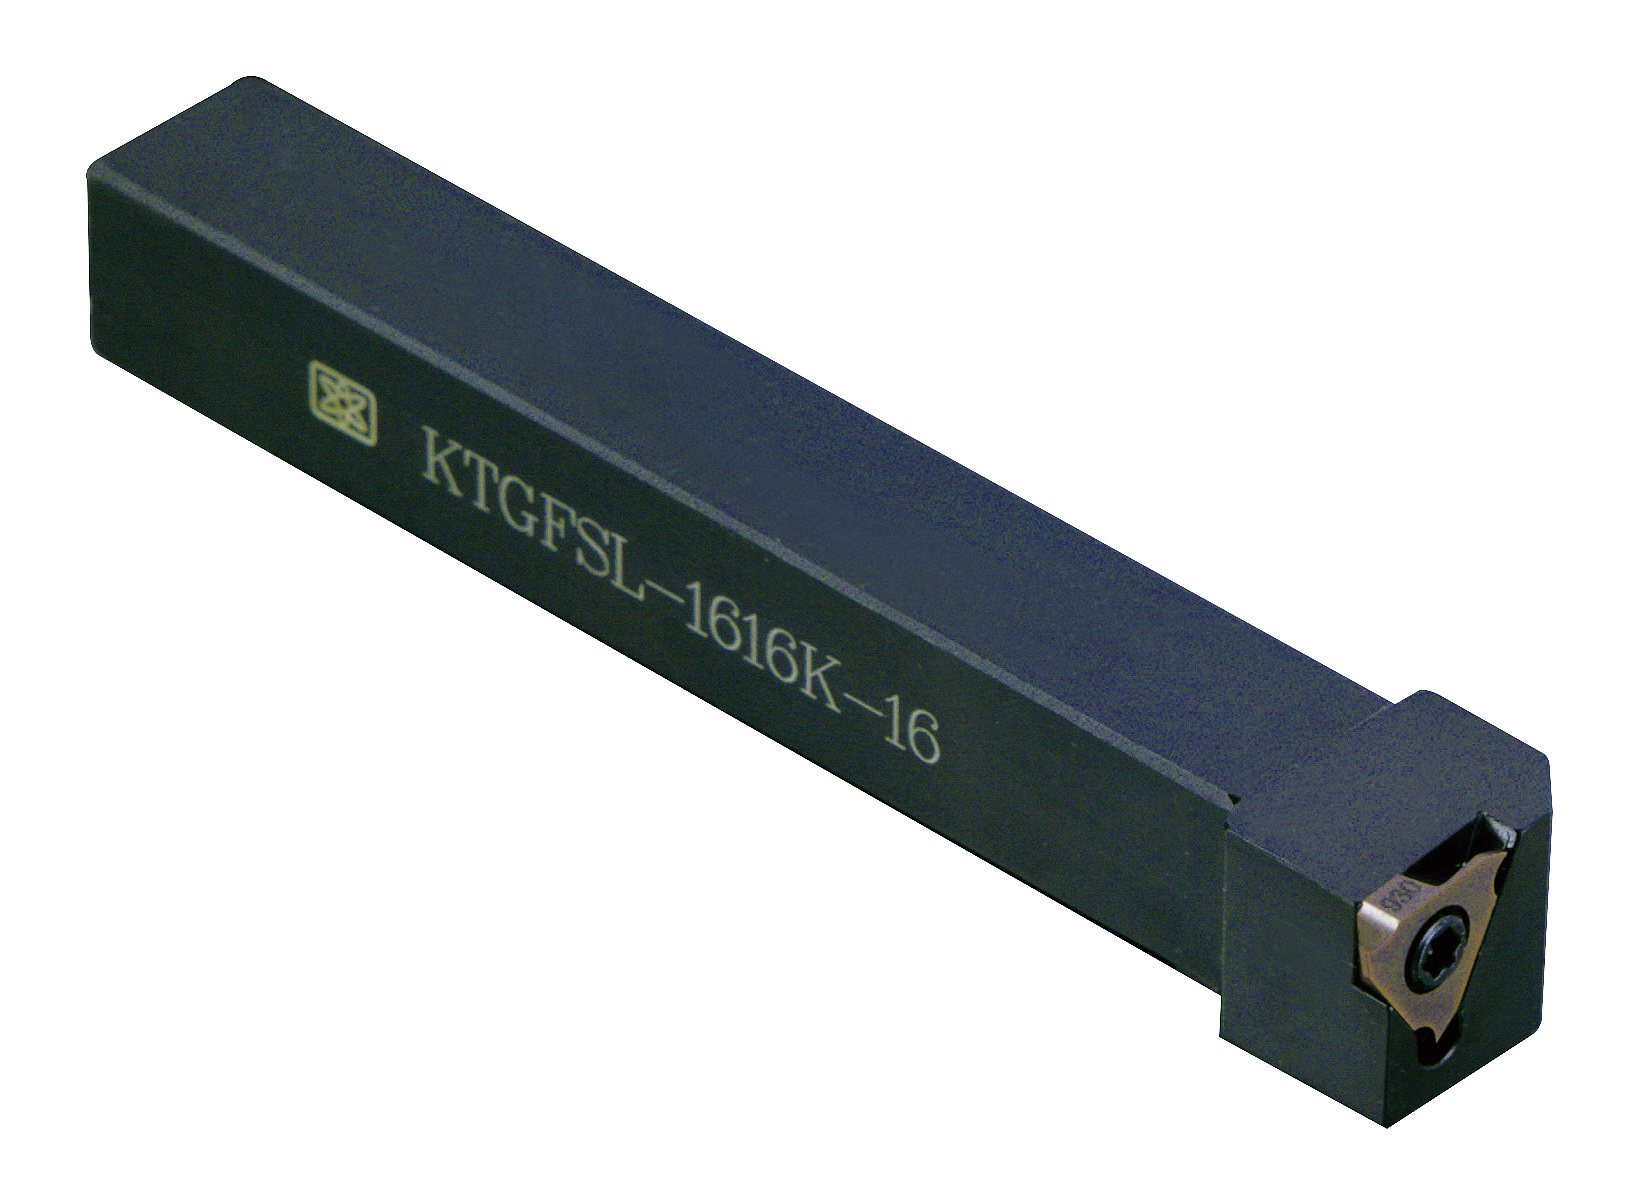 Catalog|KTGFSL (TGF32R) External Grooving Tool Holder